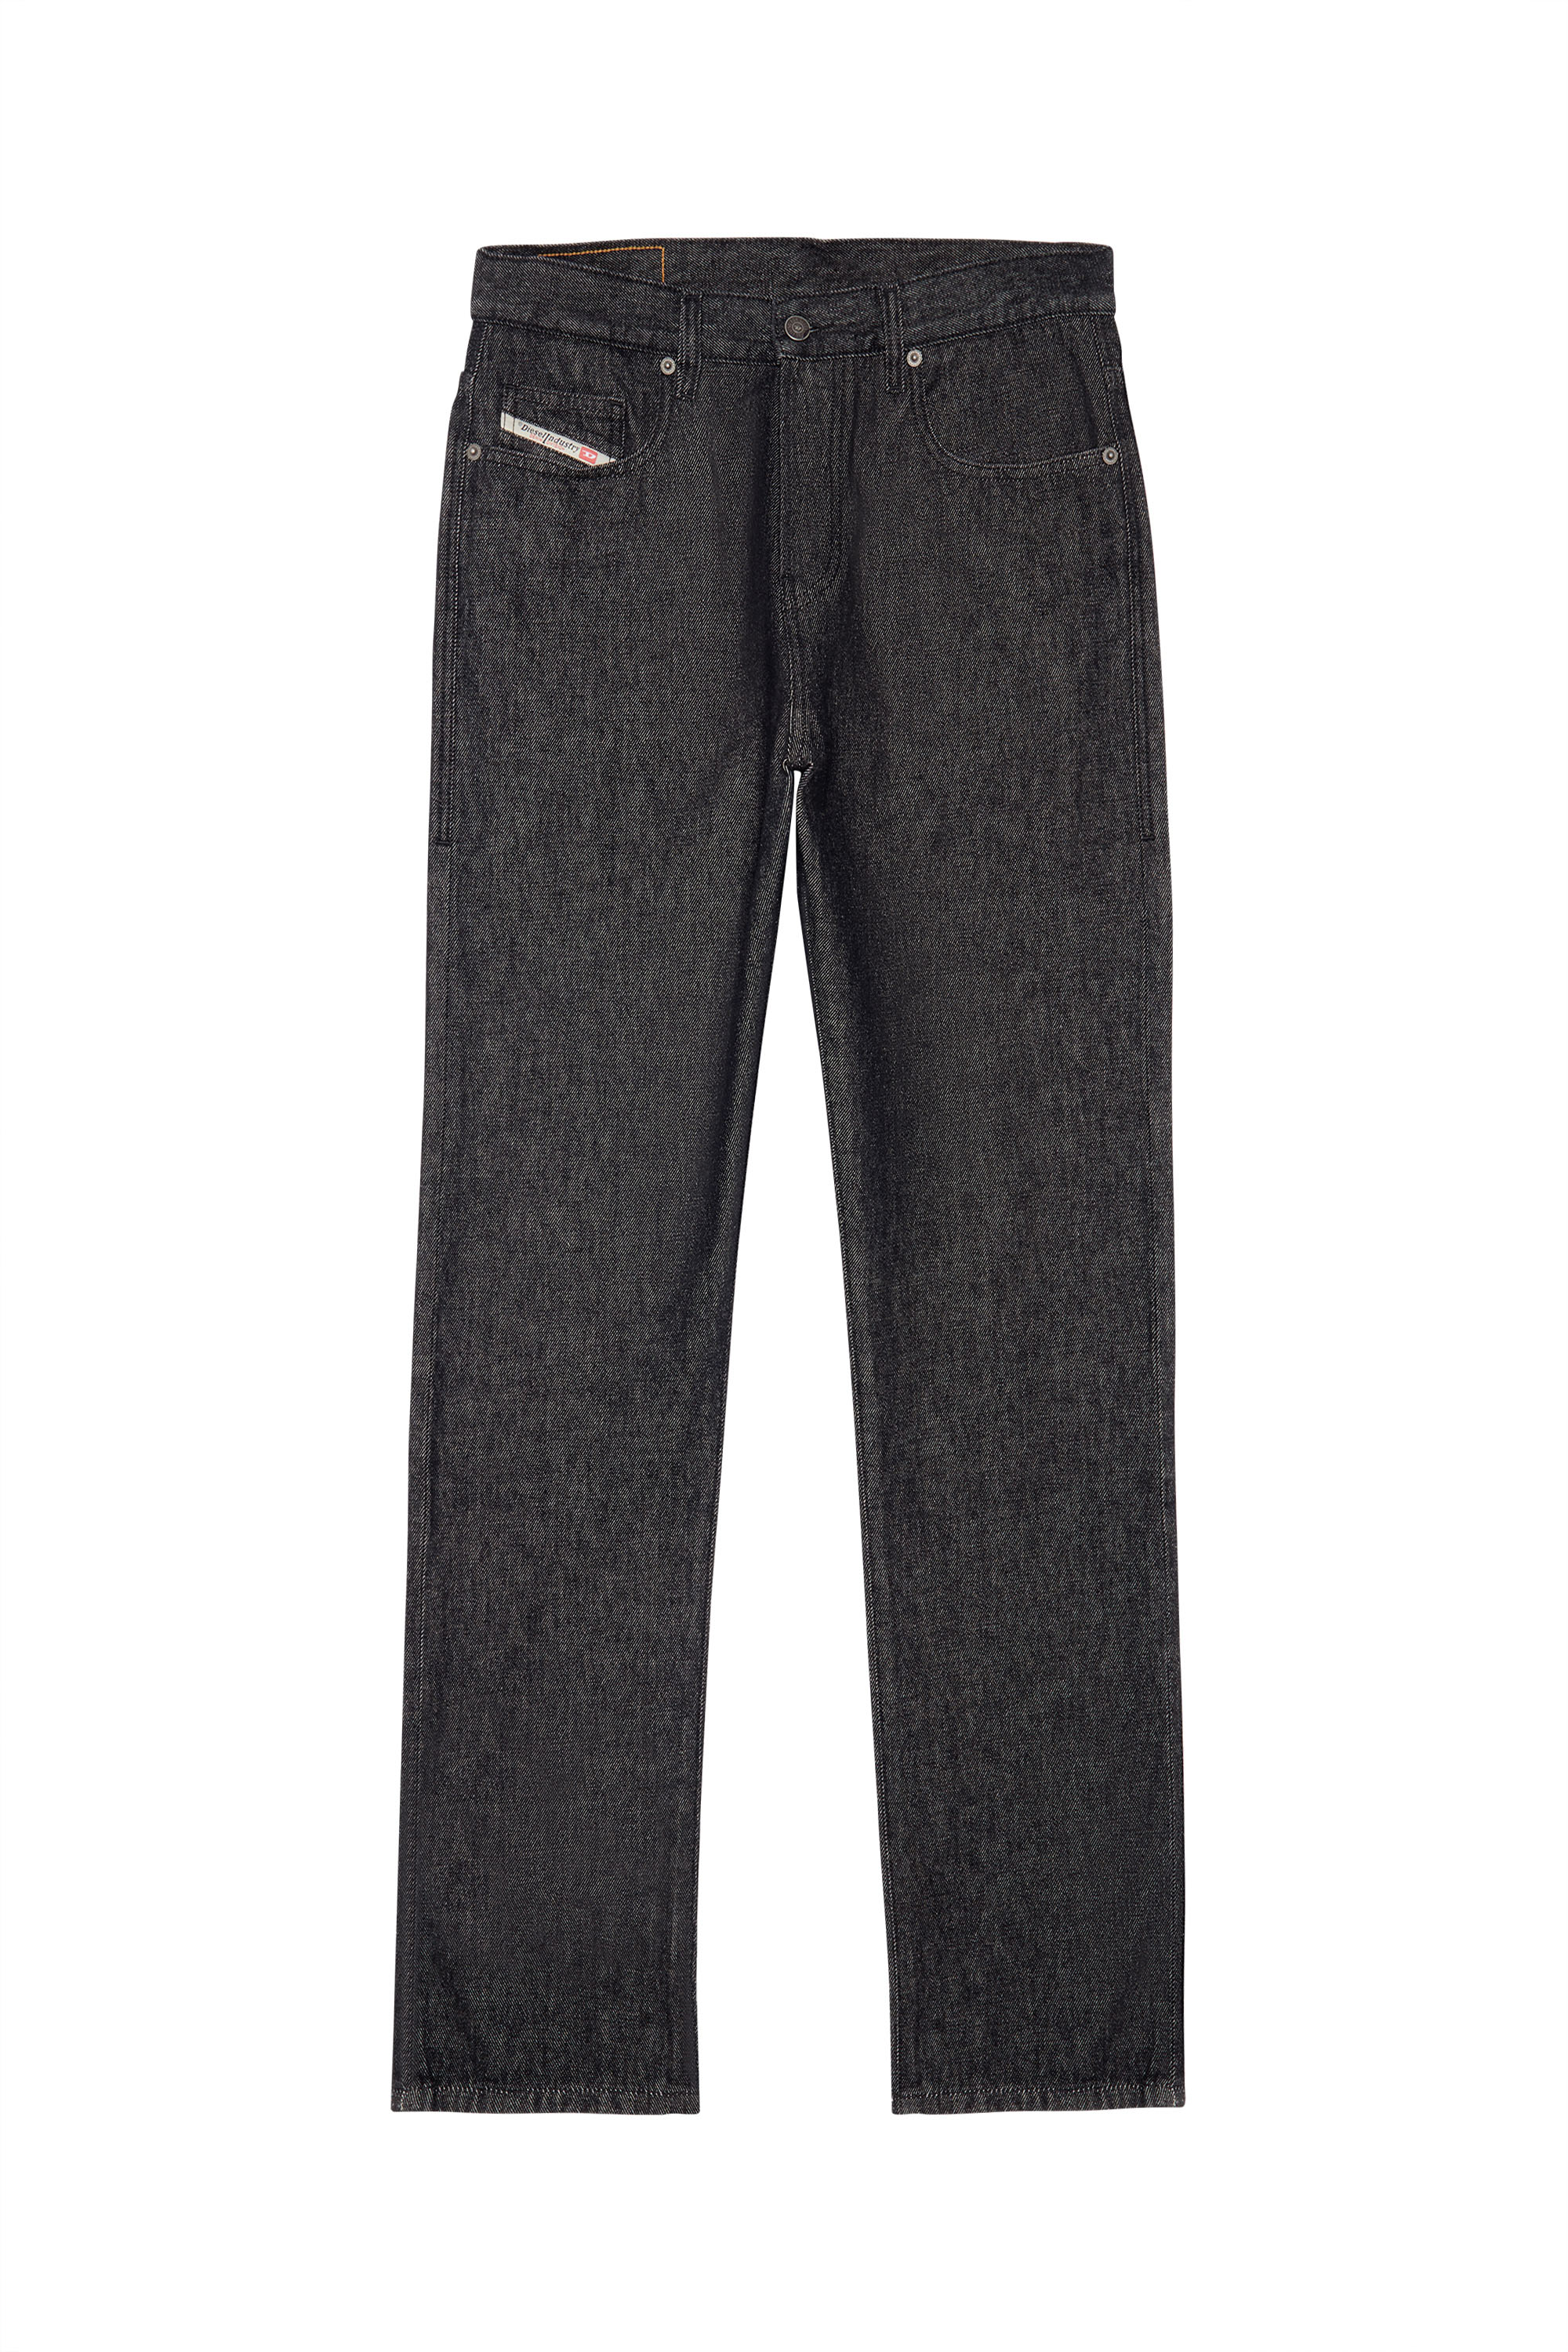 2020 D-VIKER Z9C34 Straight Jeans, Black/Dark grey - Jeans